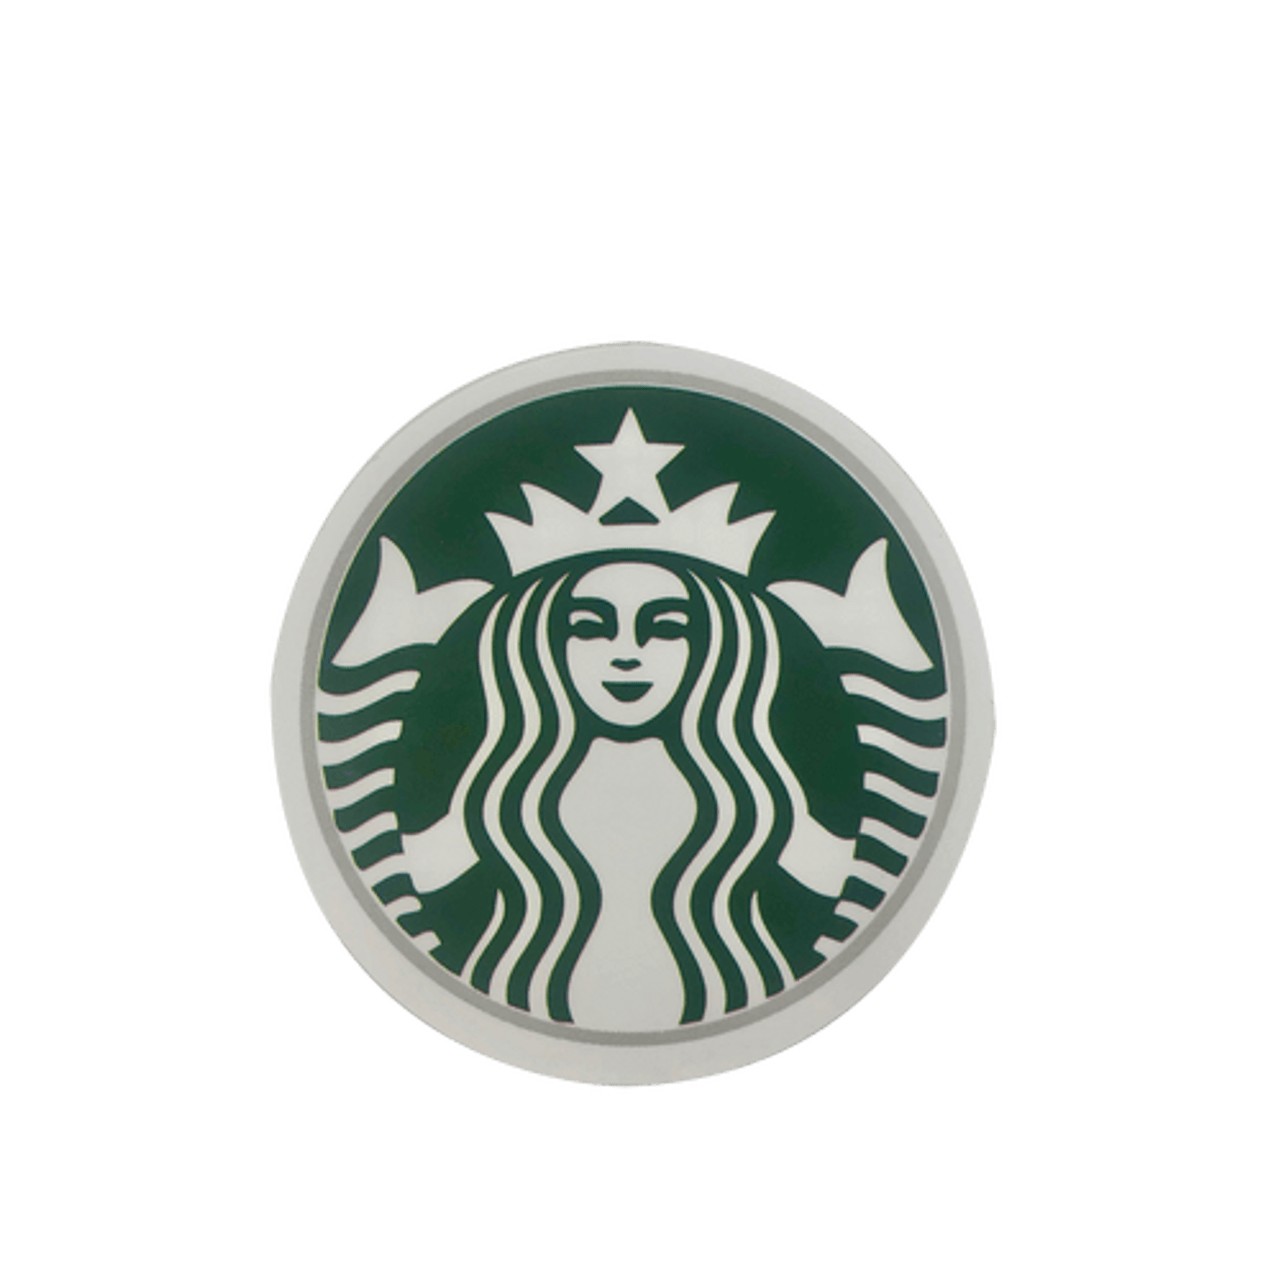 Starbucks Stickers for Sale  Coffee sticker design, Coffee